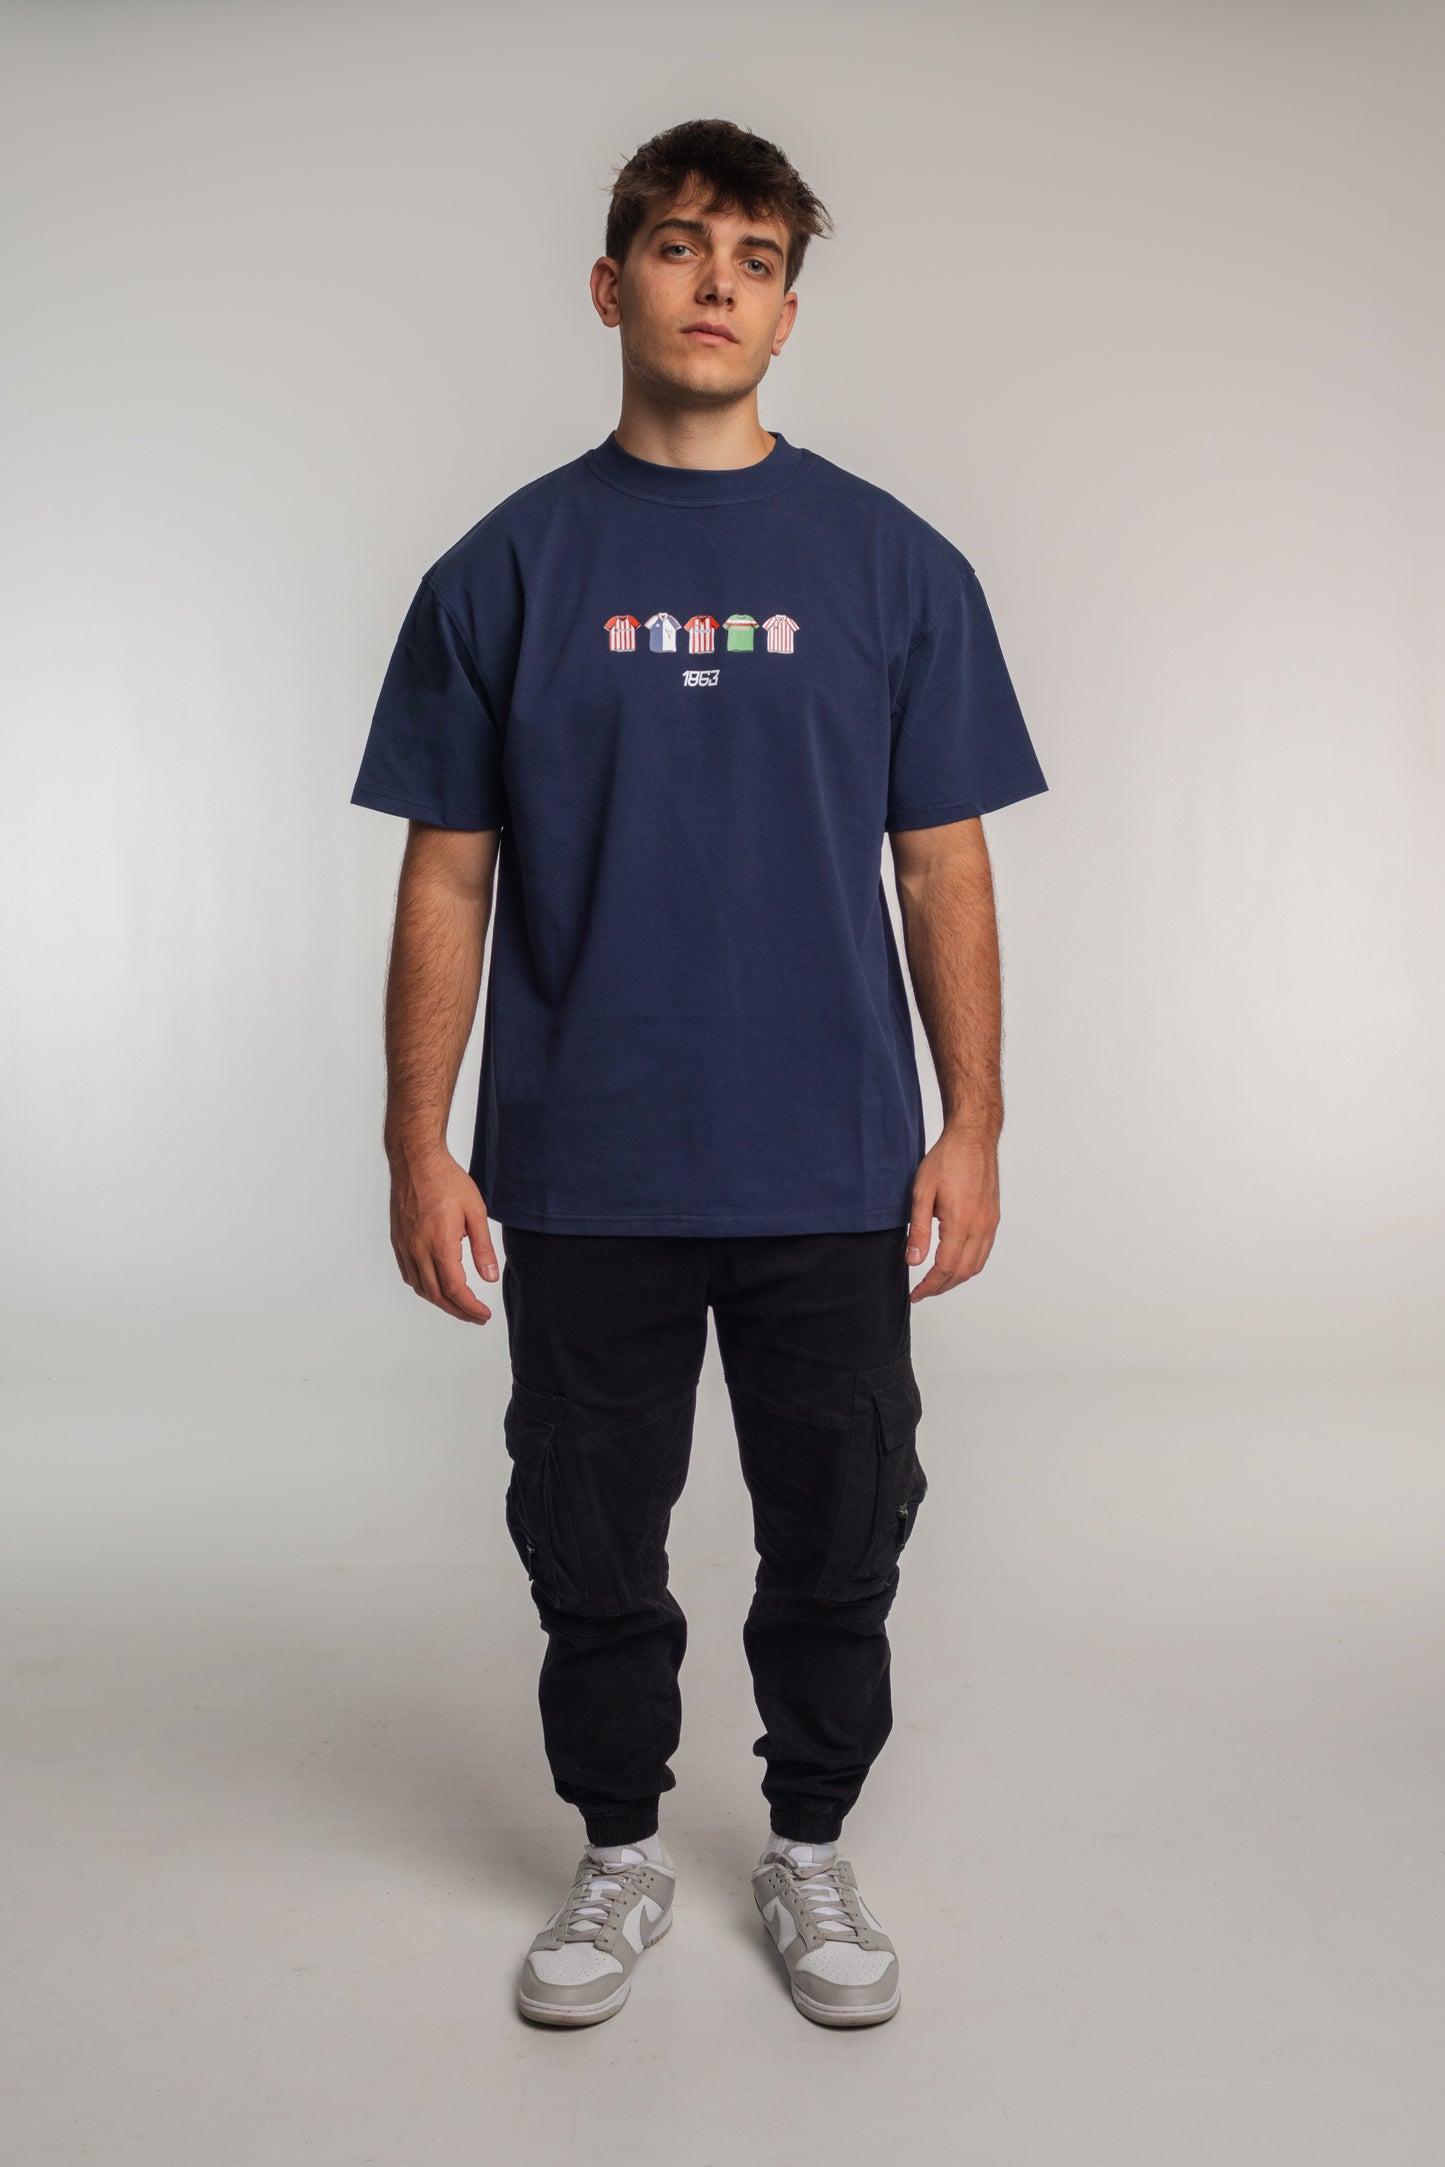 Historical Lions Kits T-shirt - Navy Blue